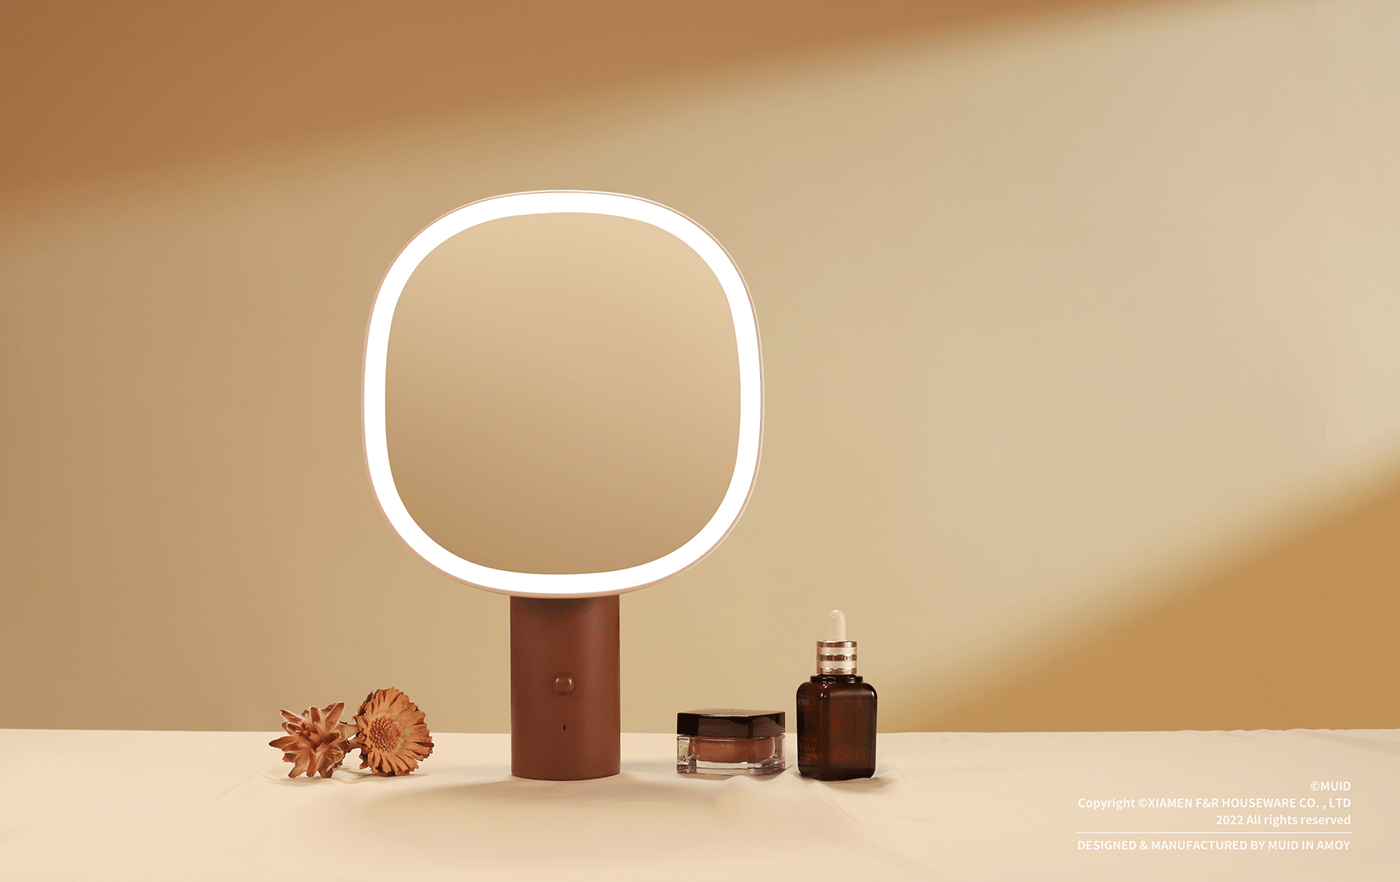 lamps lighting mirror Muid product design  产品设计，工业设计